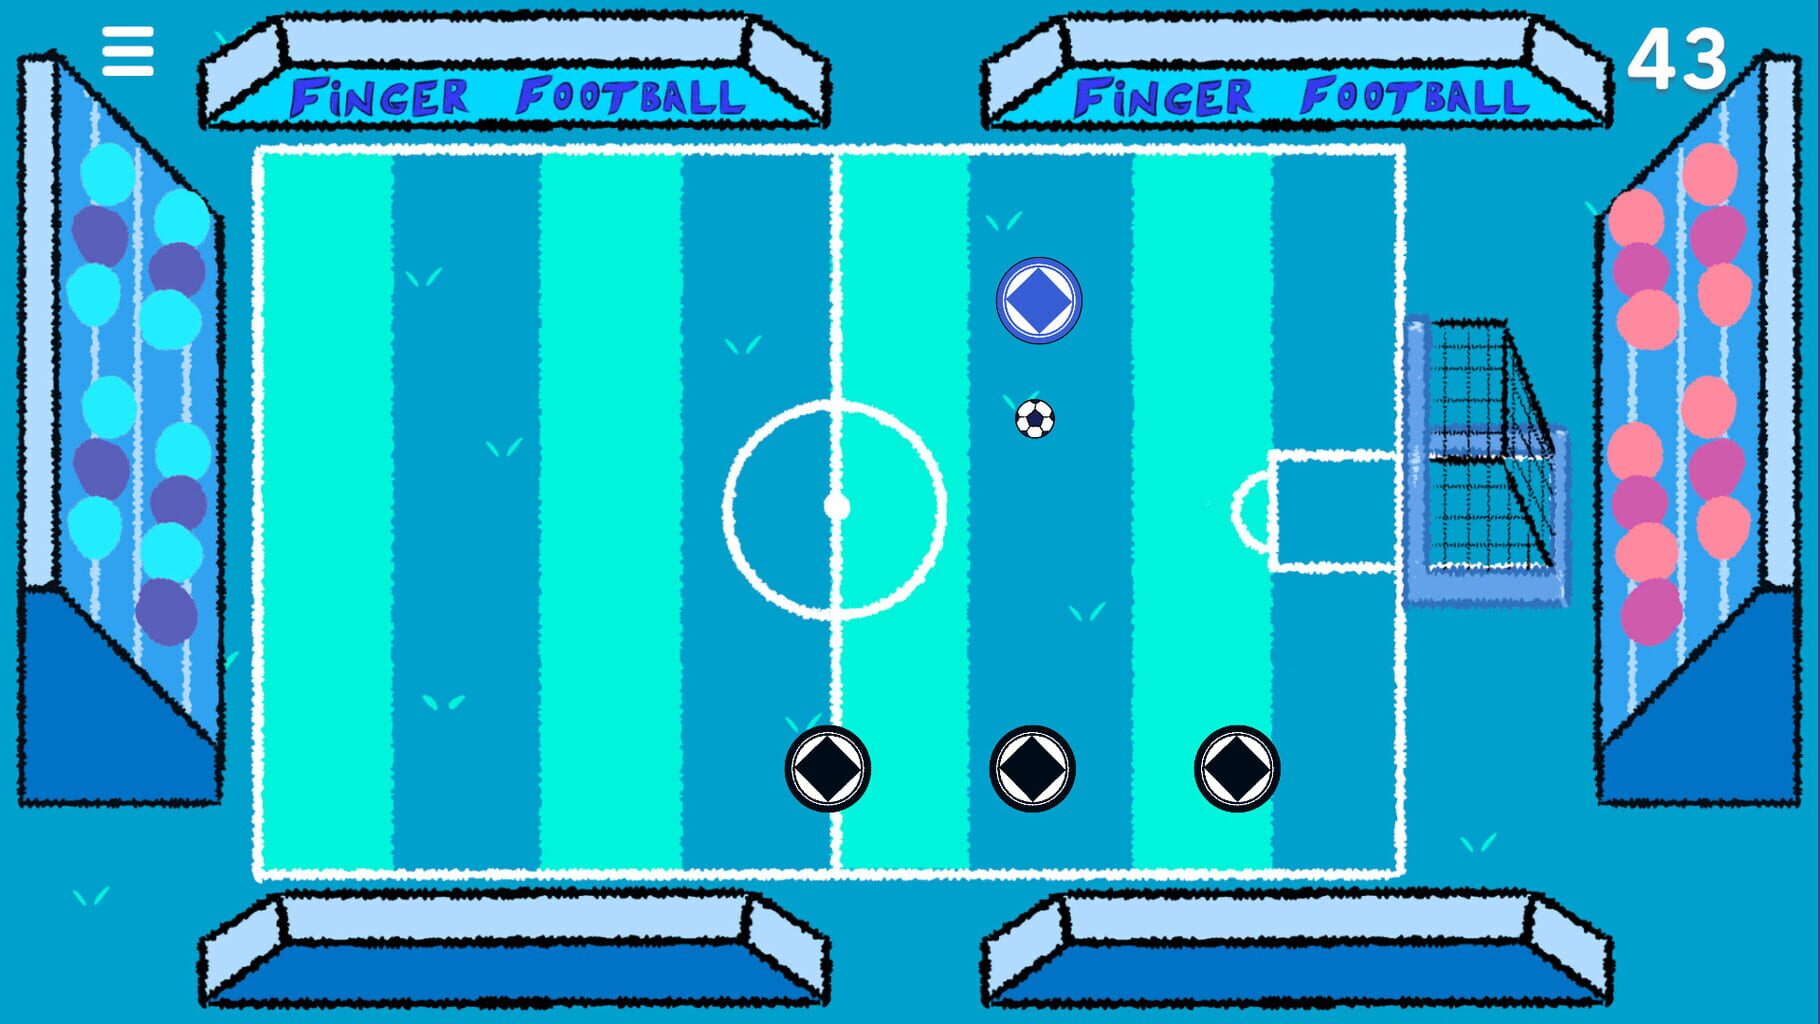 Finger Football: Goal in One screenshot